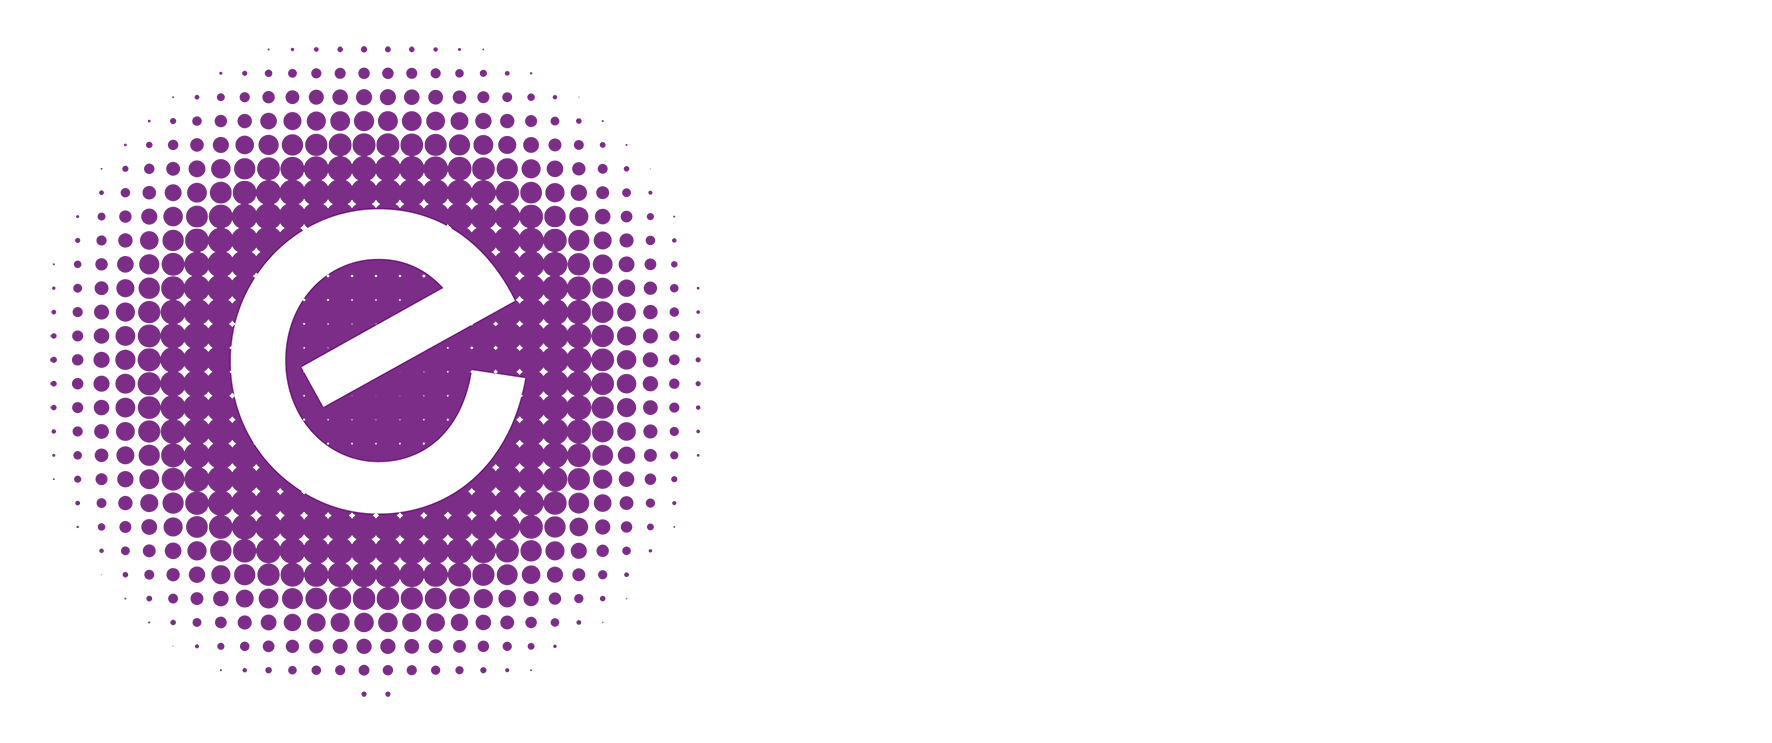 Engage Employee white